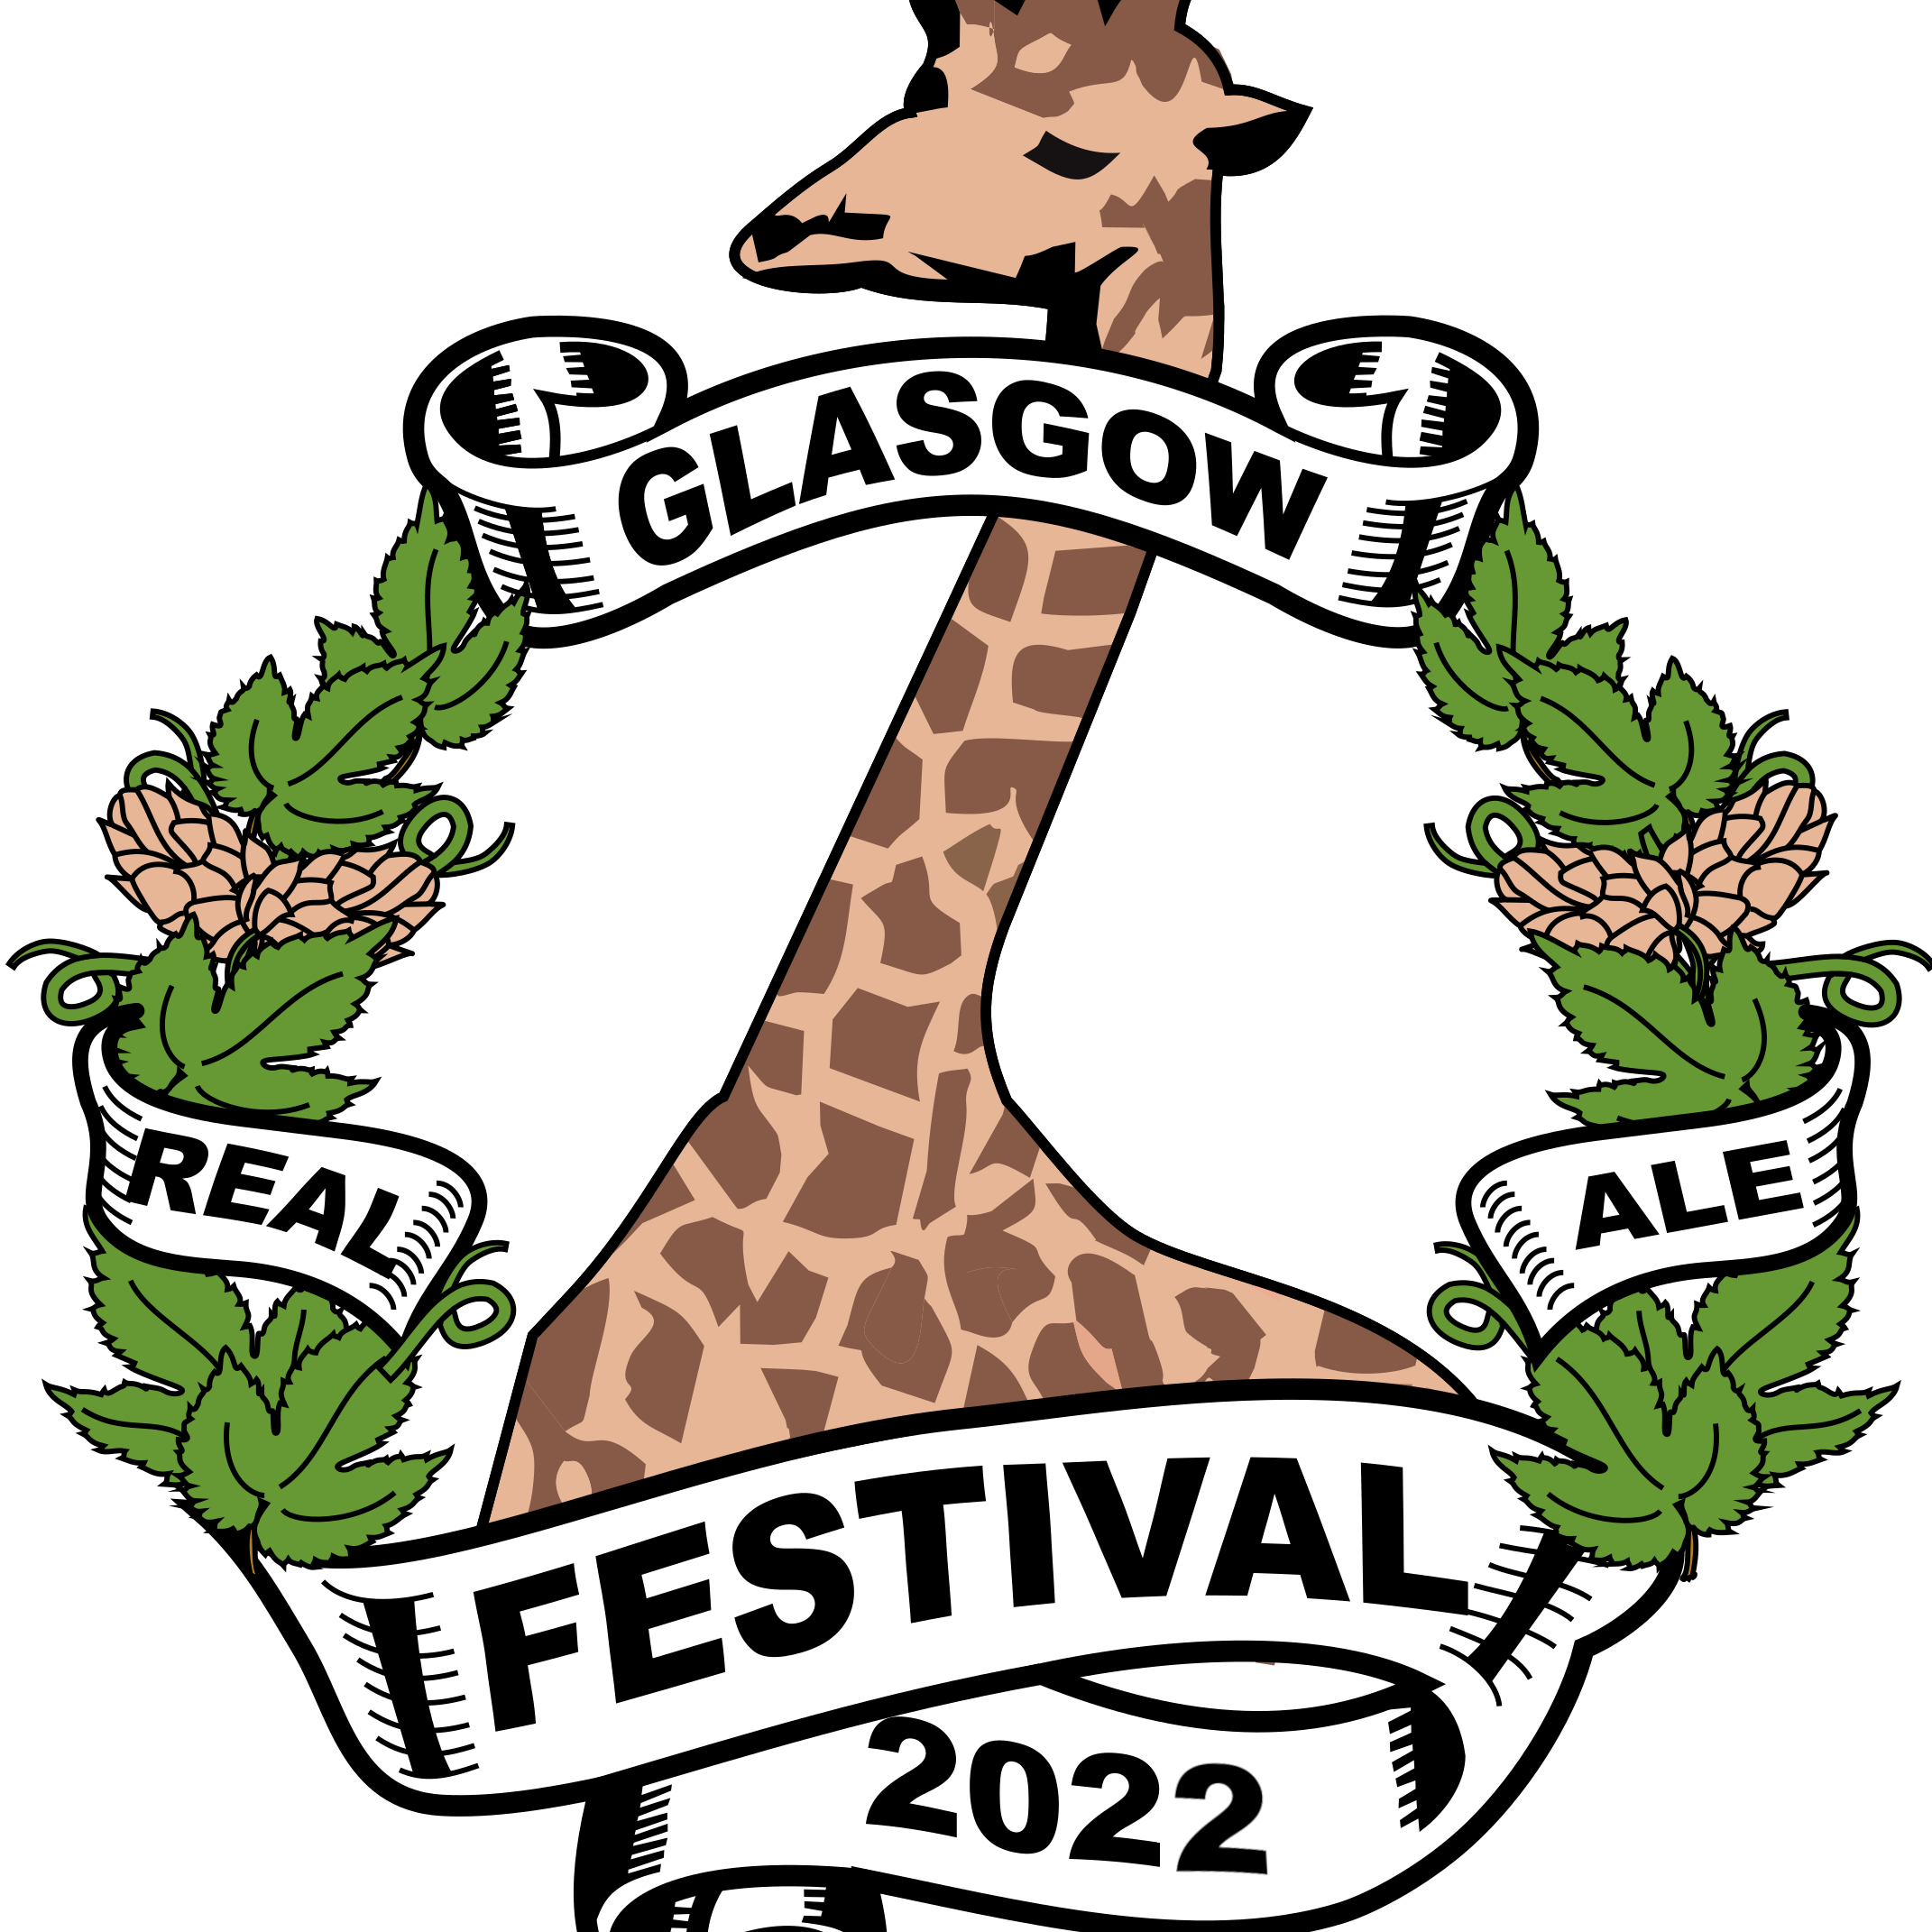 Glasgow Real Ale Festival 2022